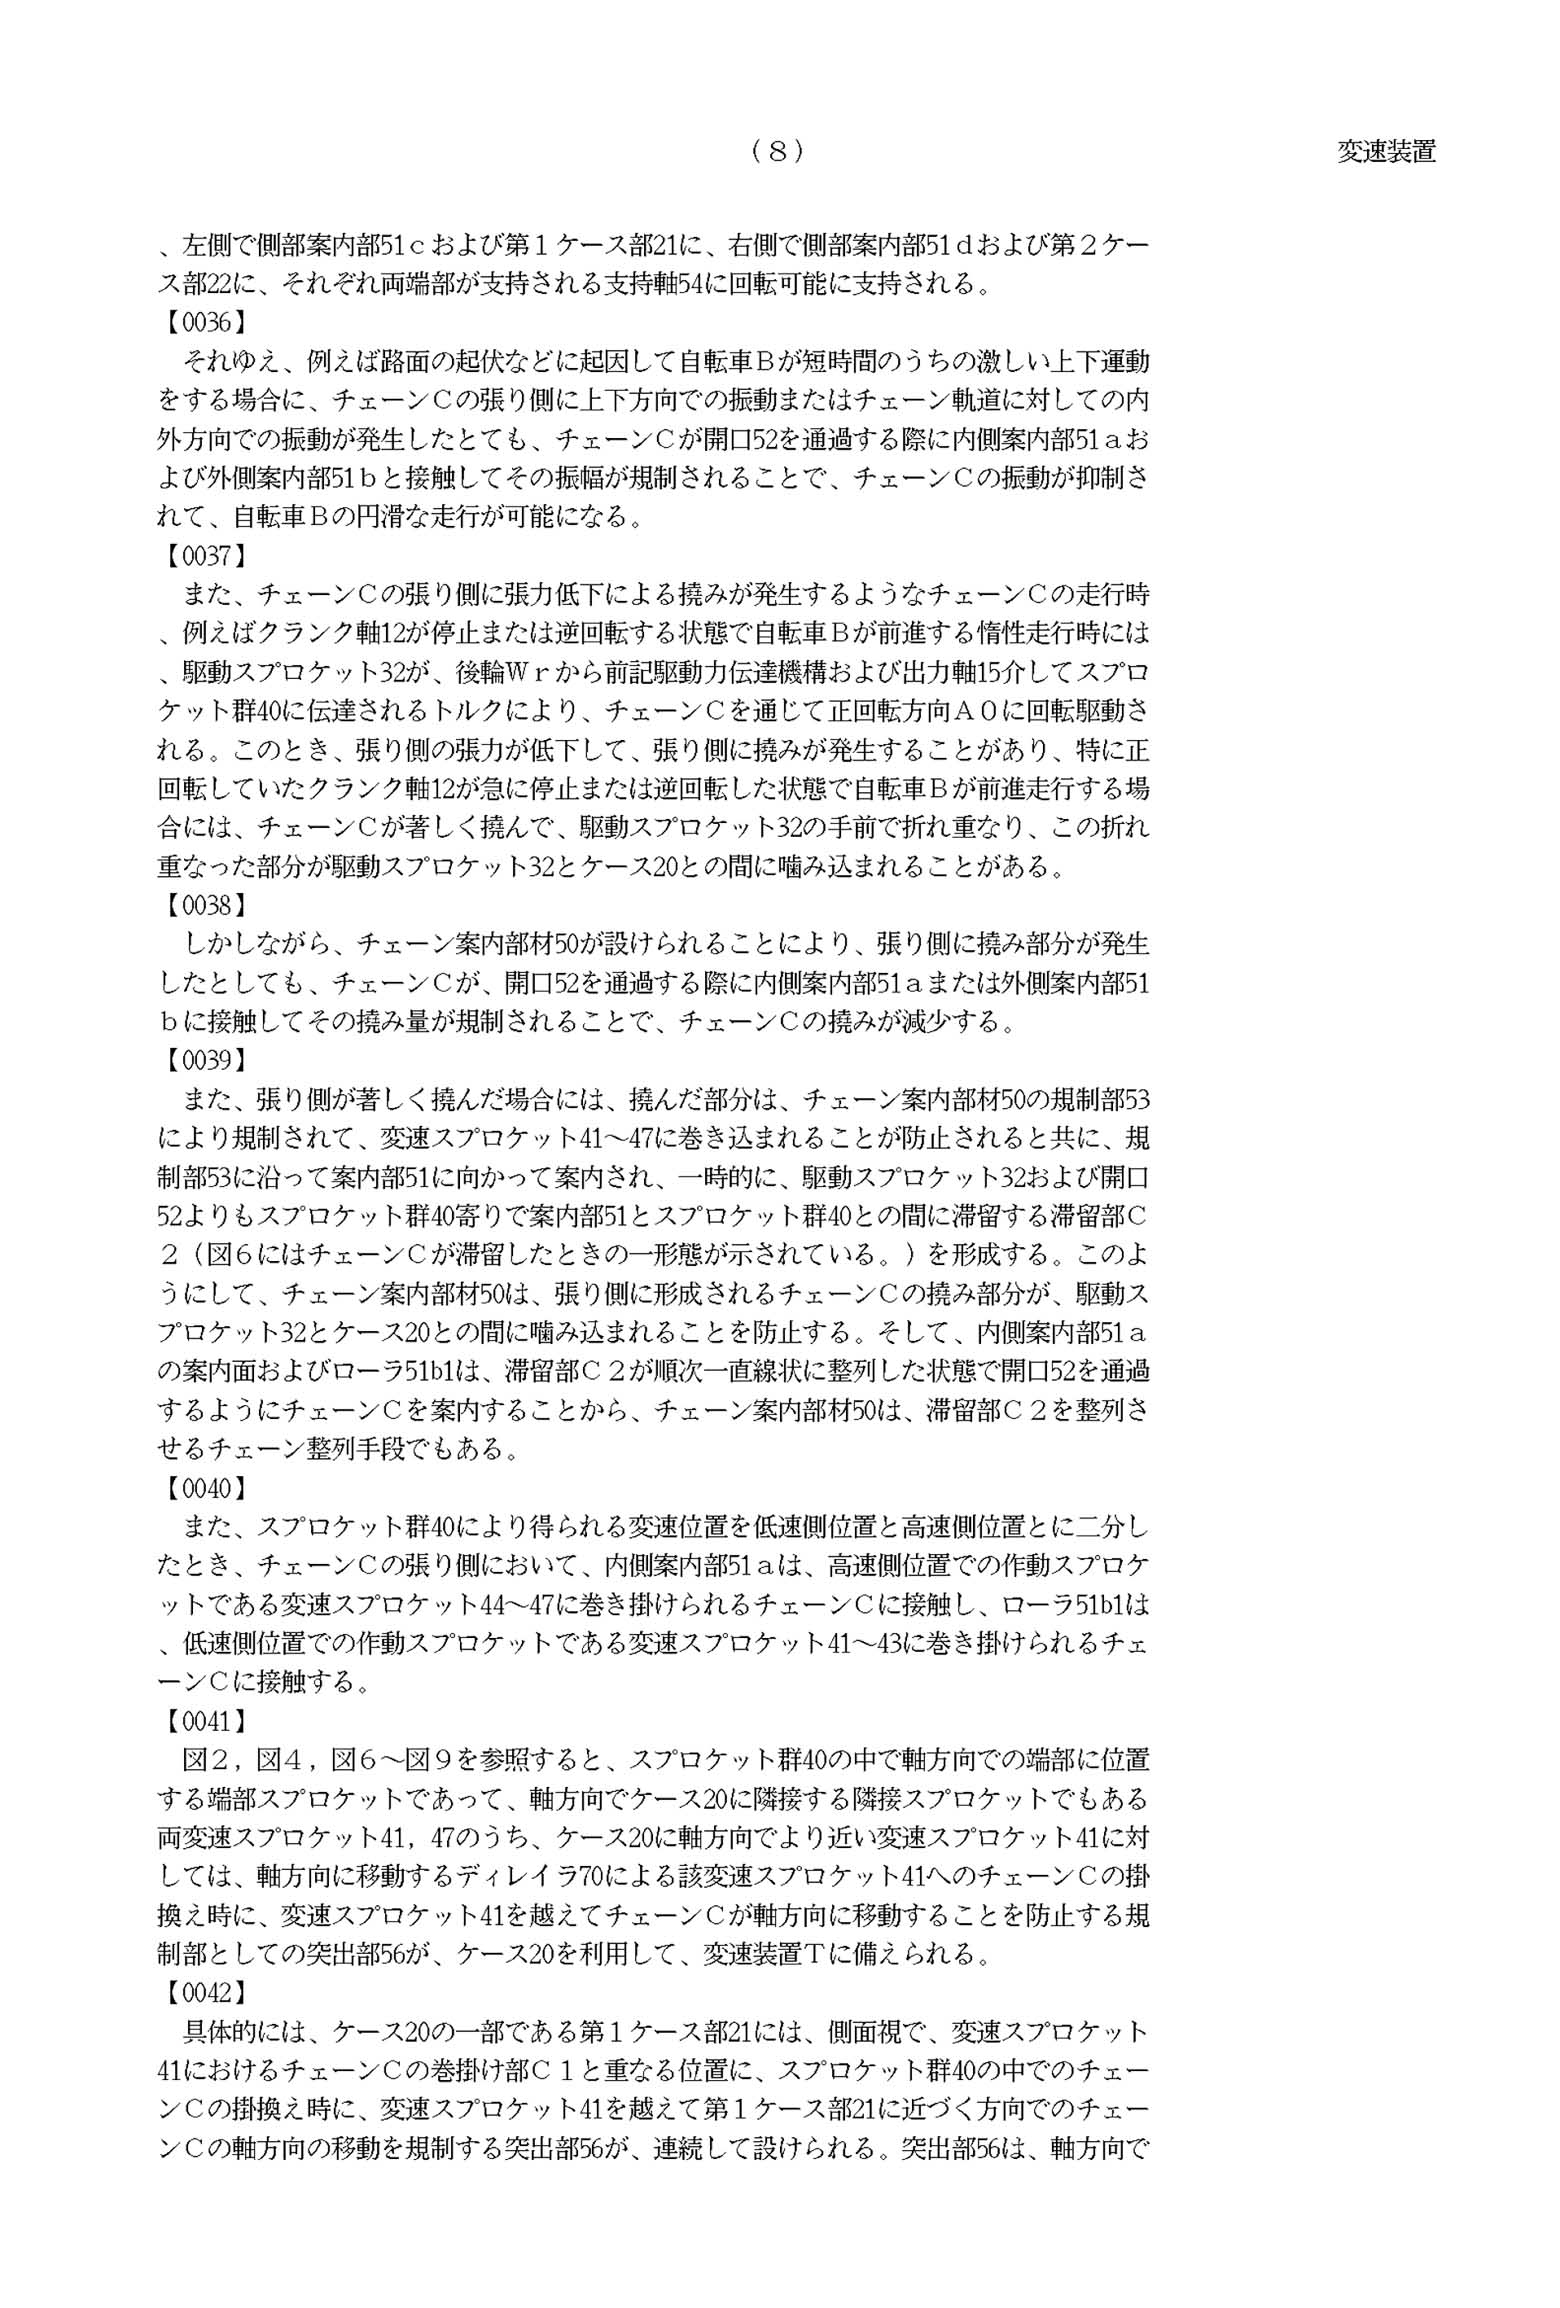 Japanese Patent 4219310 - Honda page 08 main image